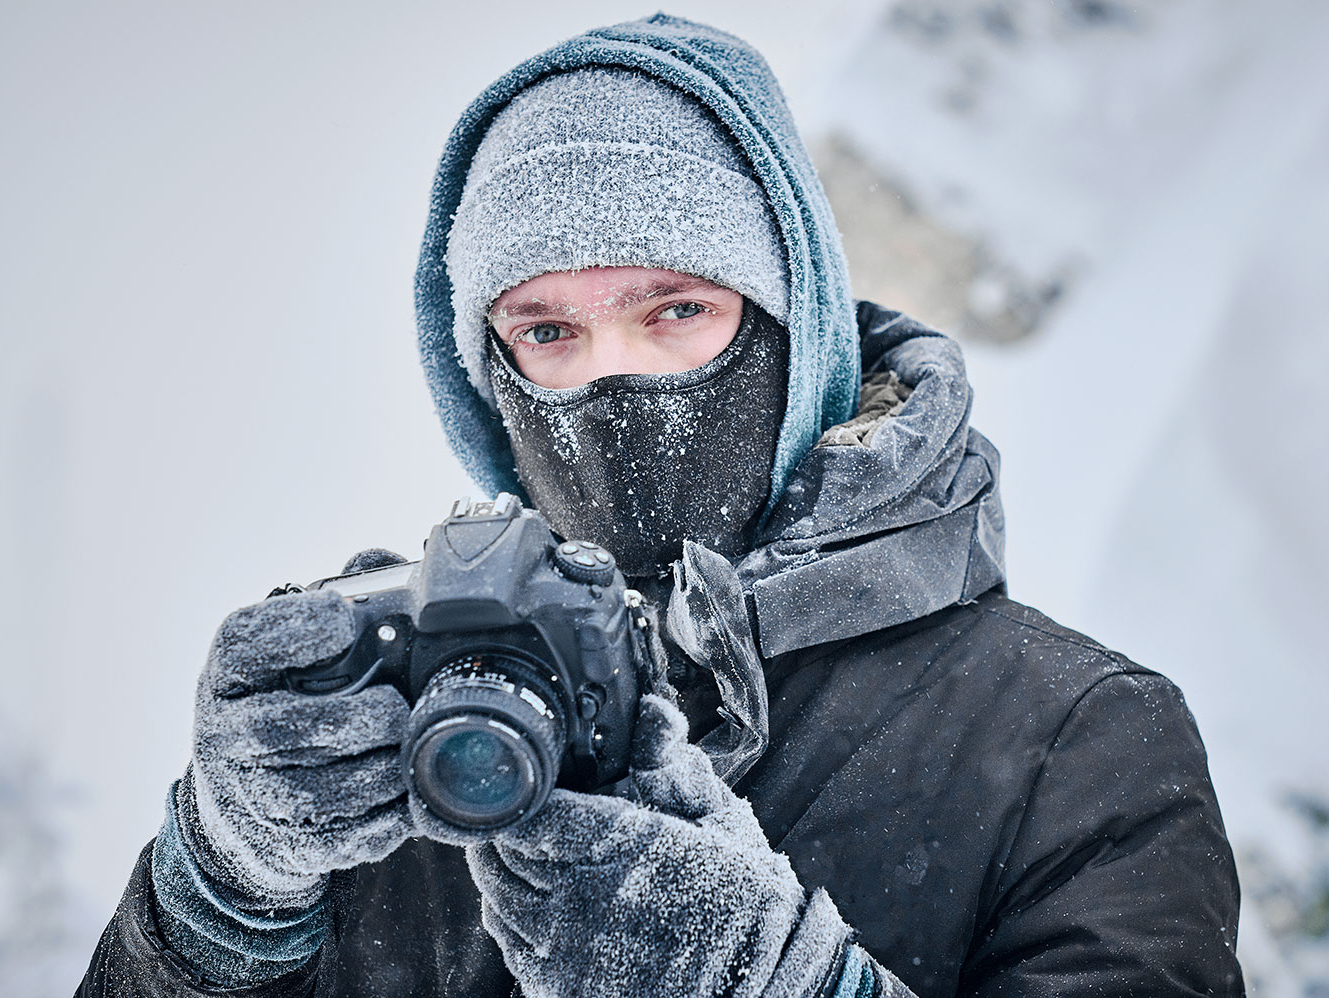 Fotograf ute i kaldt vintervær